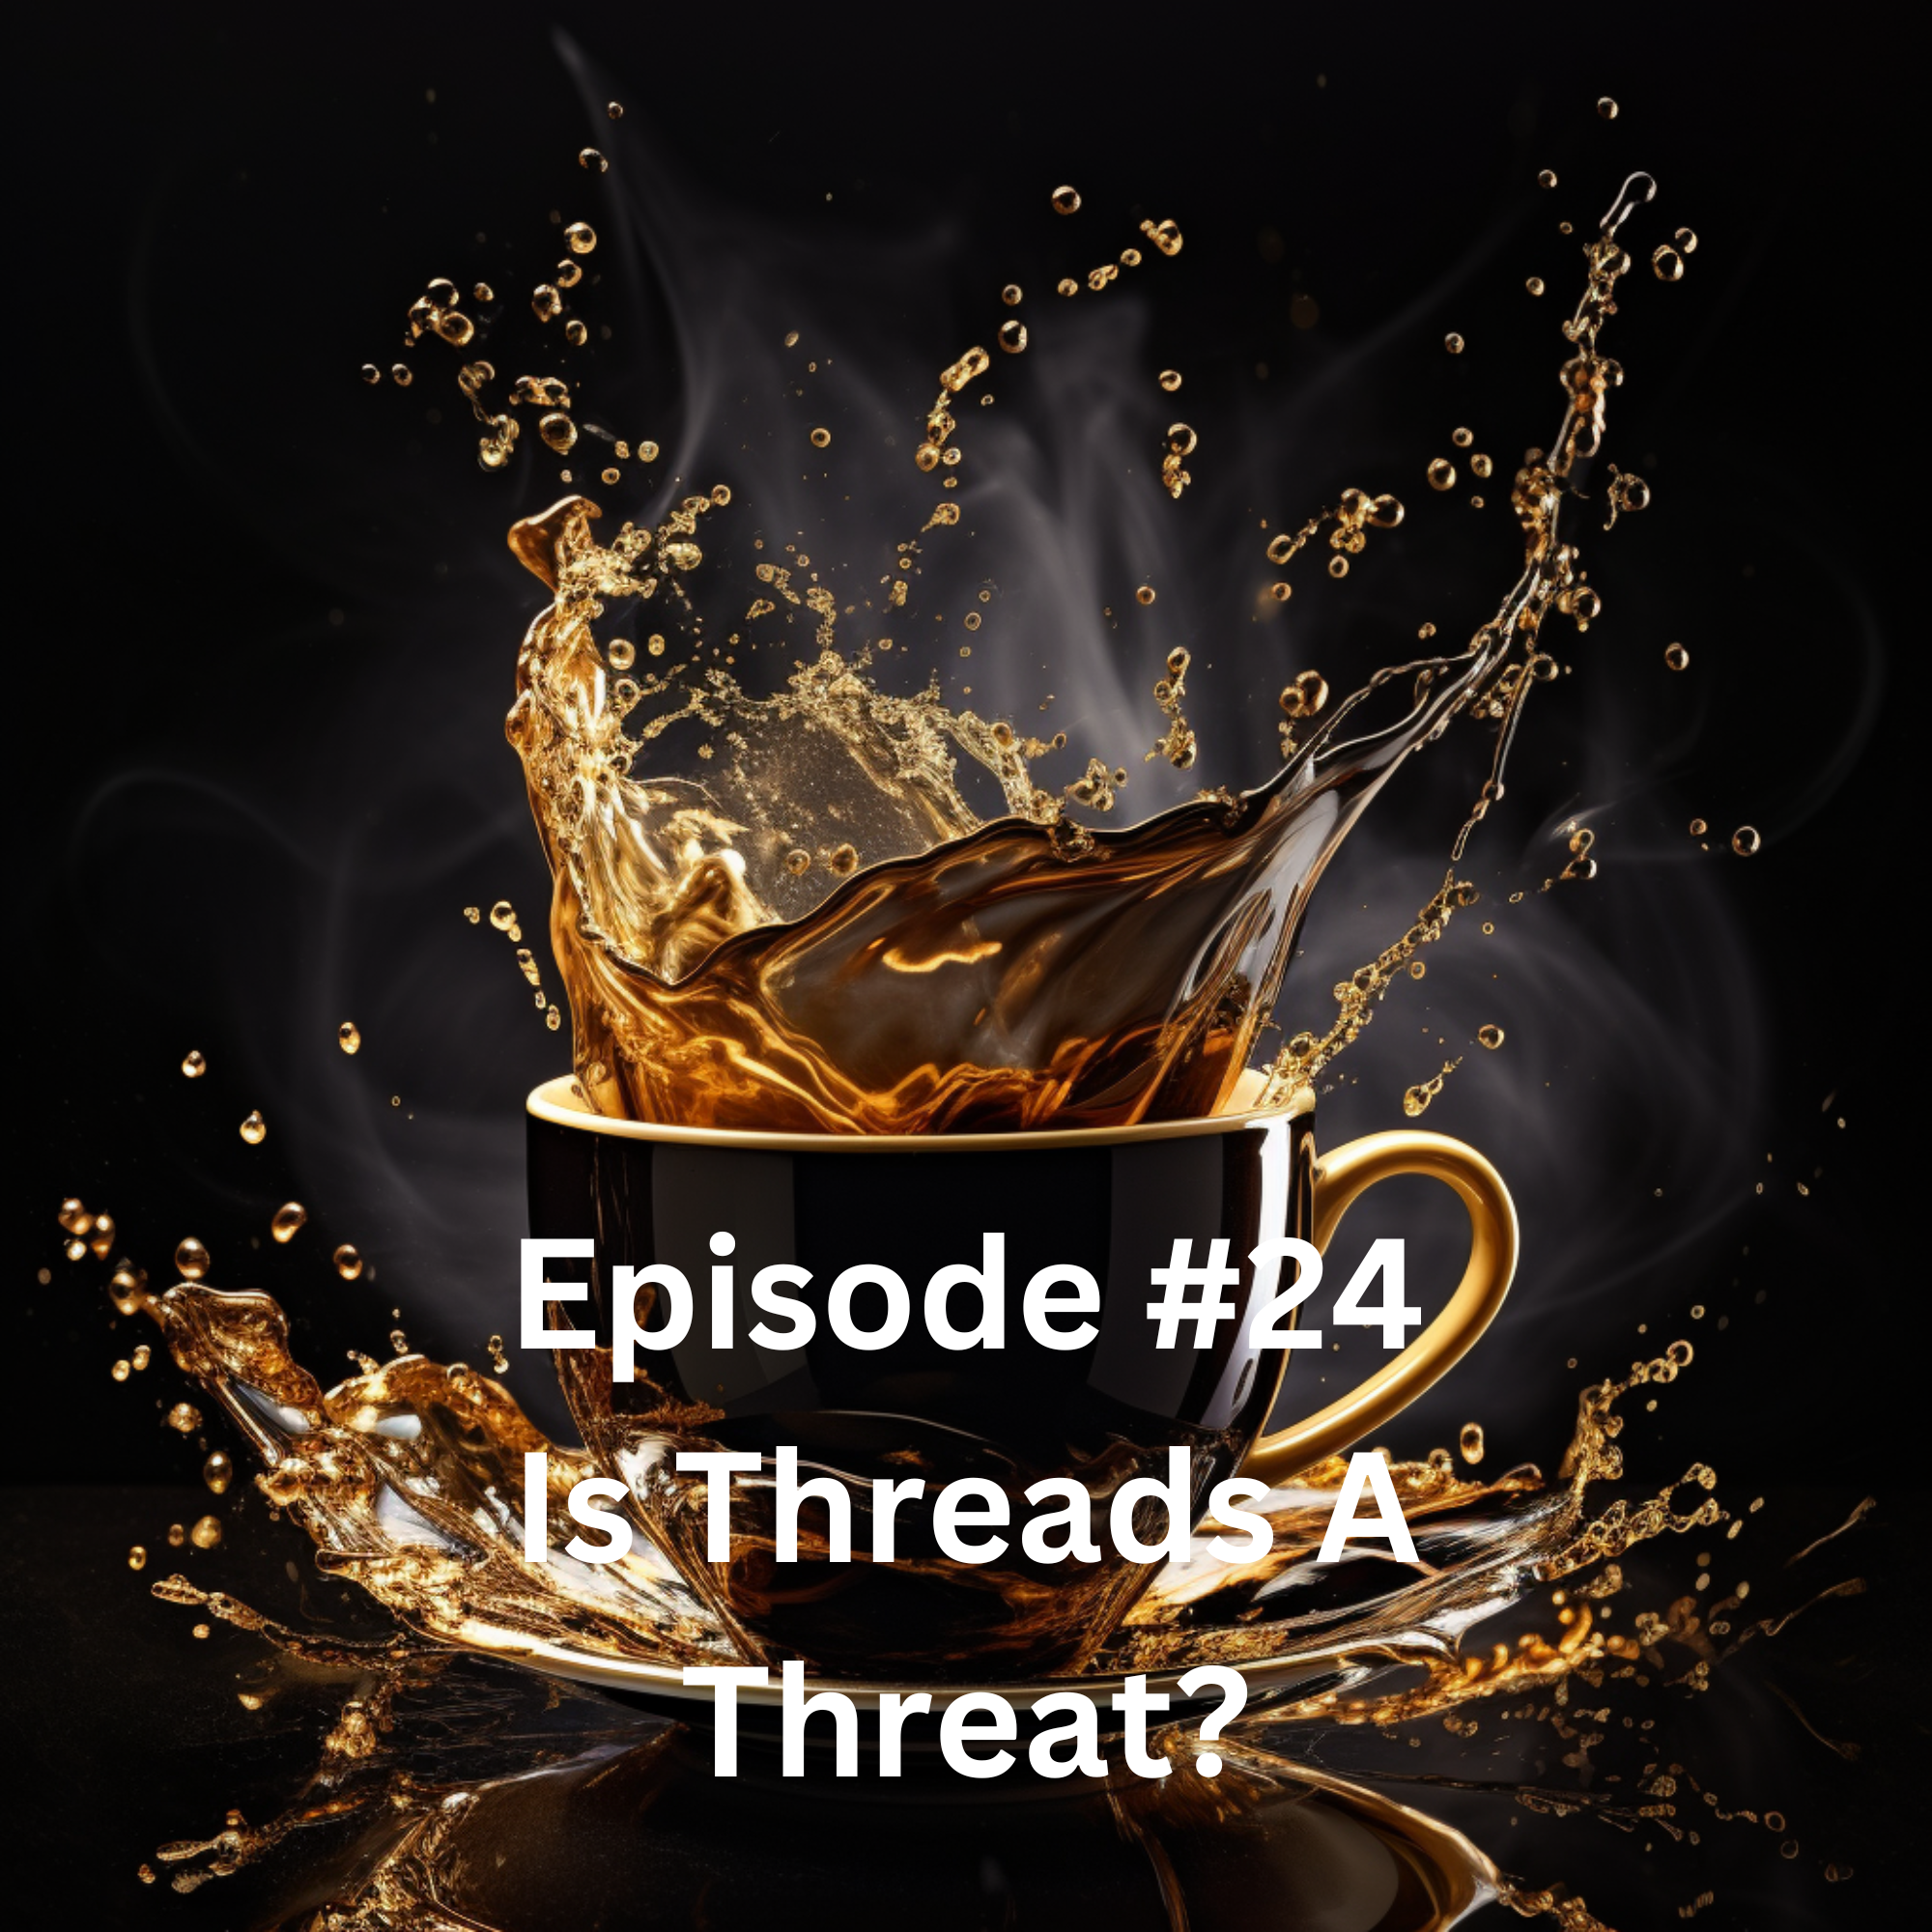 Episode #24 Is Threads A Threat?